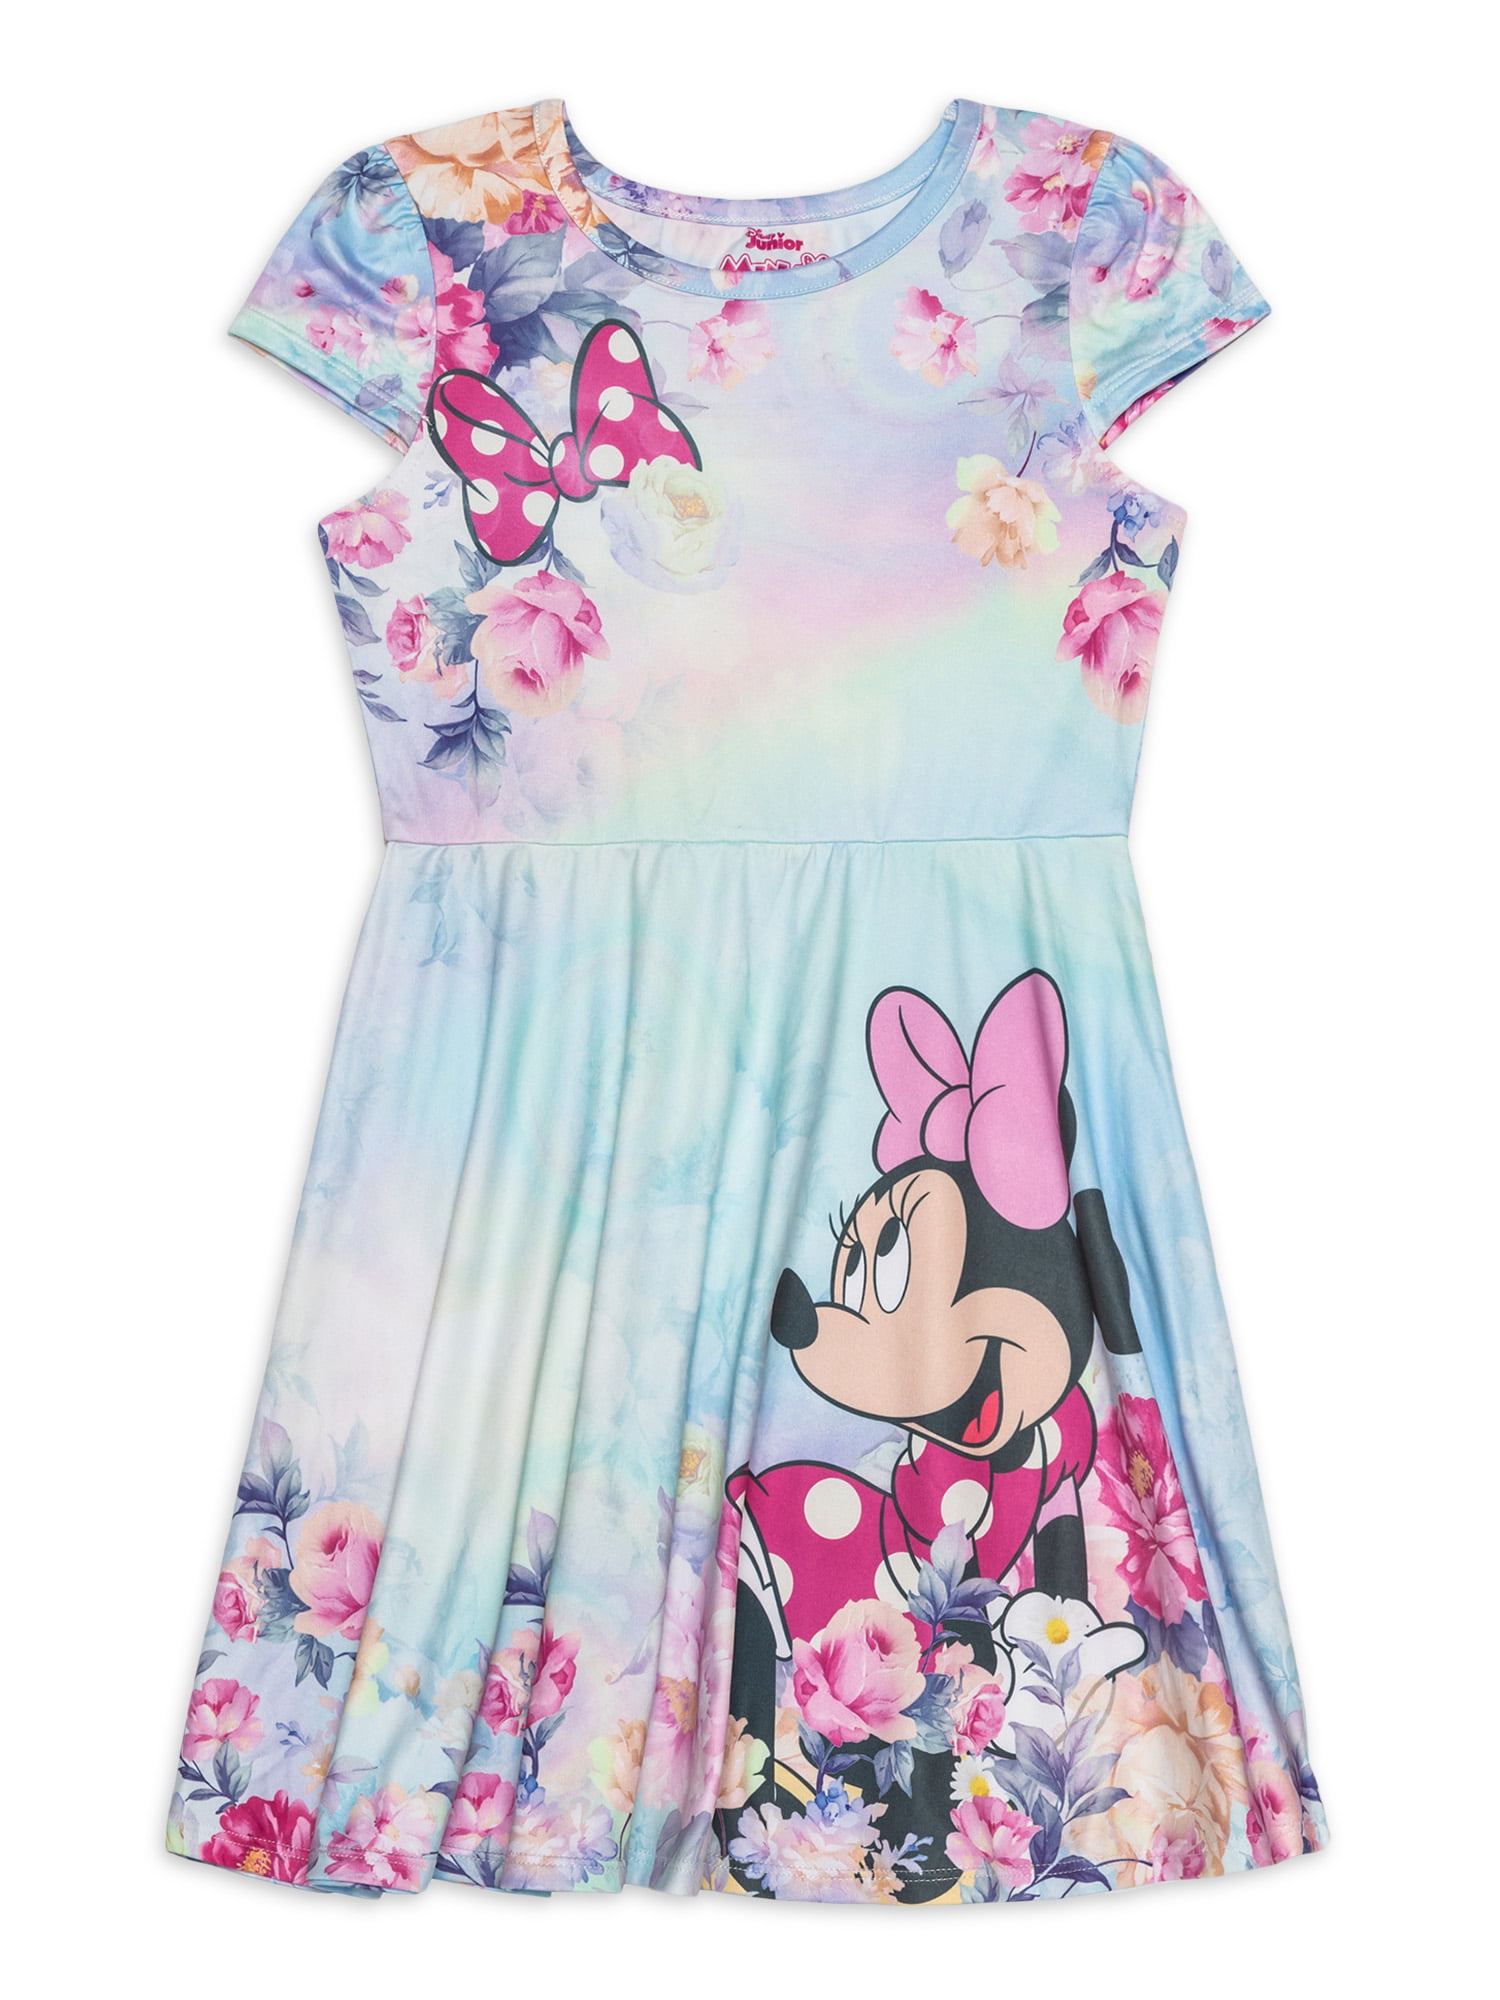 Girls Dress Disney Summer Sundress Minnie Mouse Skater 9 Months to 7 Years 